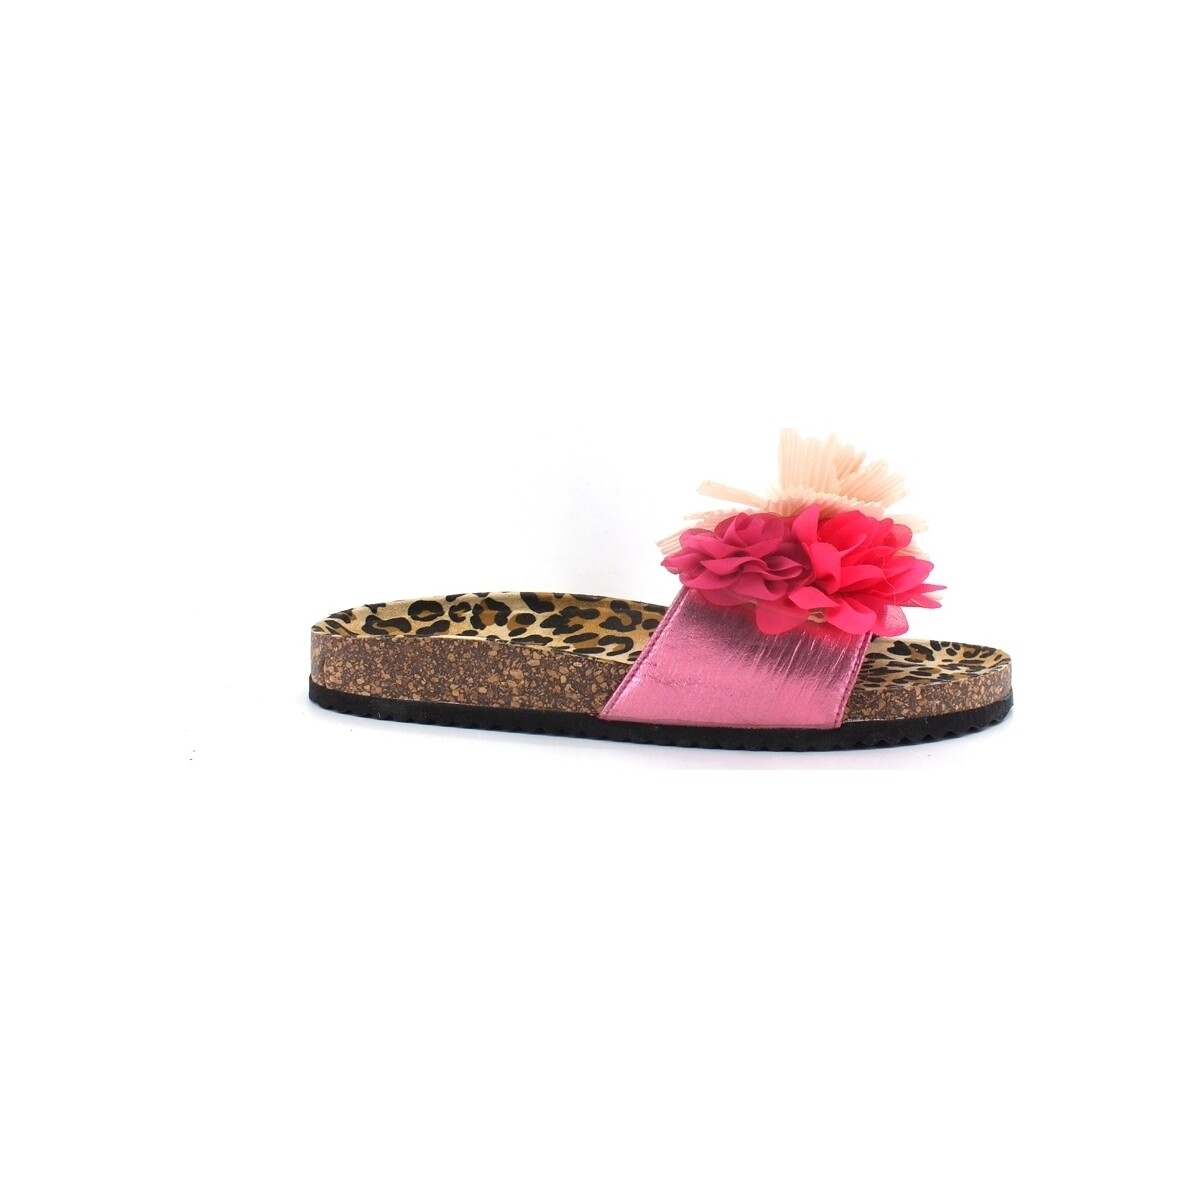 Chaussures Femme Bottes Colors of California Ciabatta Leo Fiore Fuxia HC.BIO053 Rose